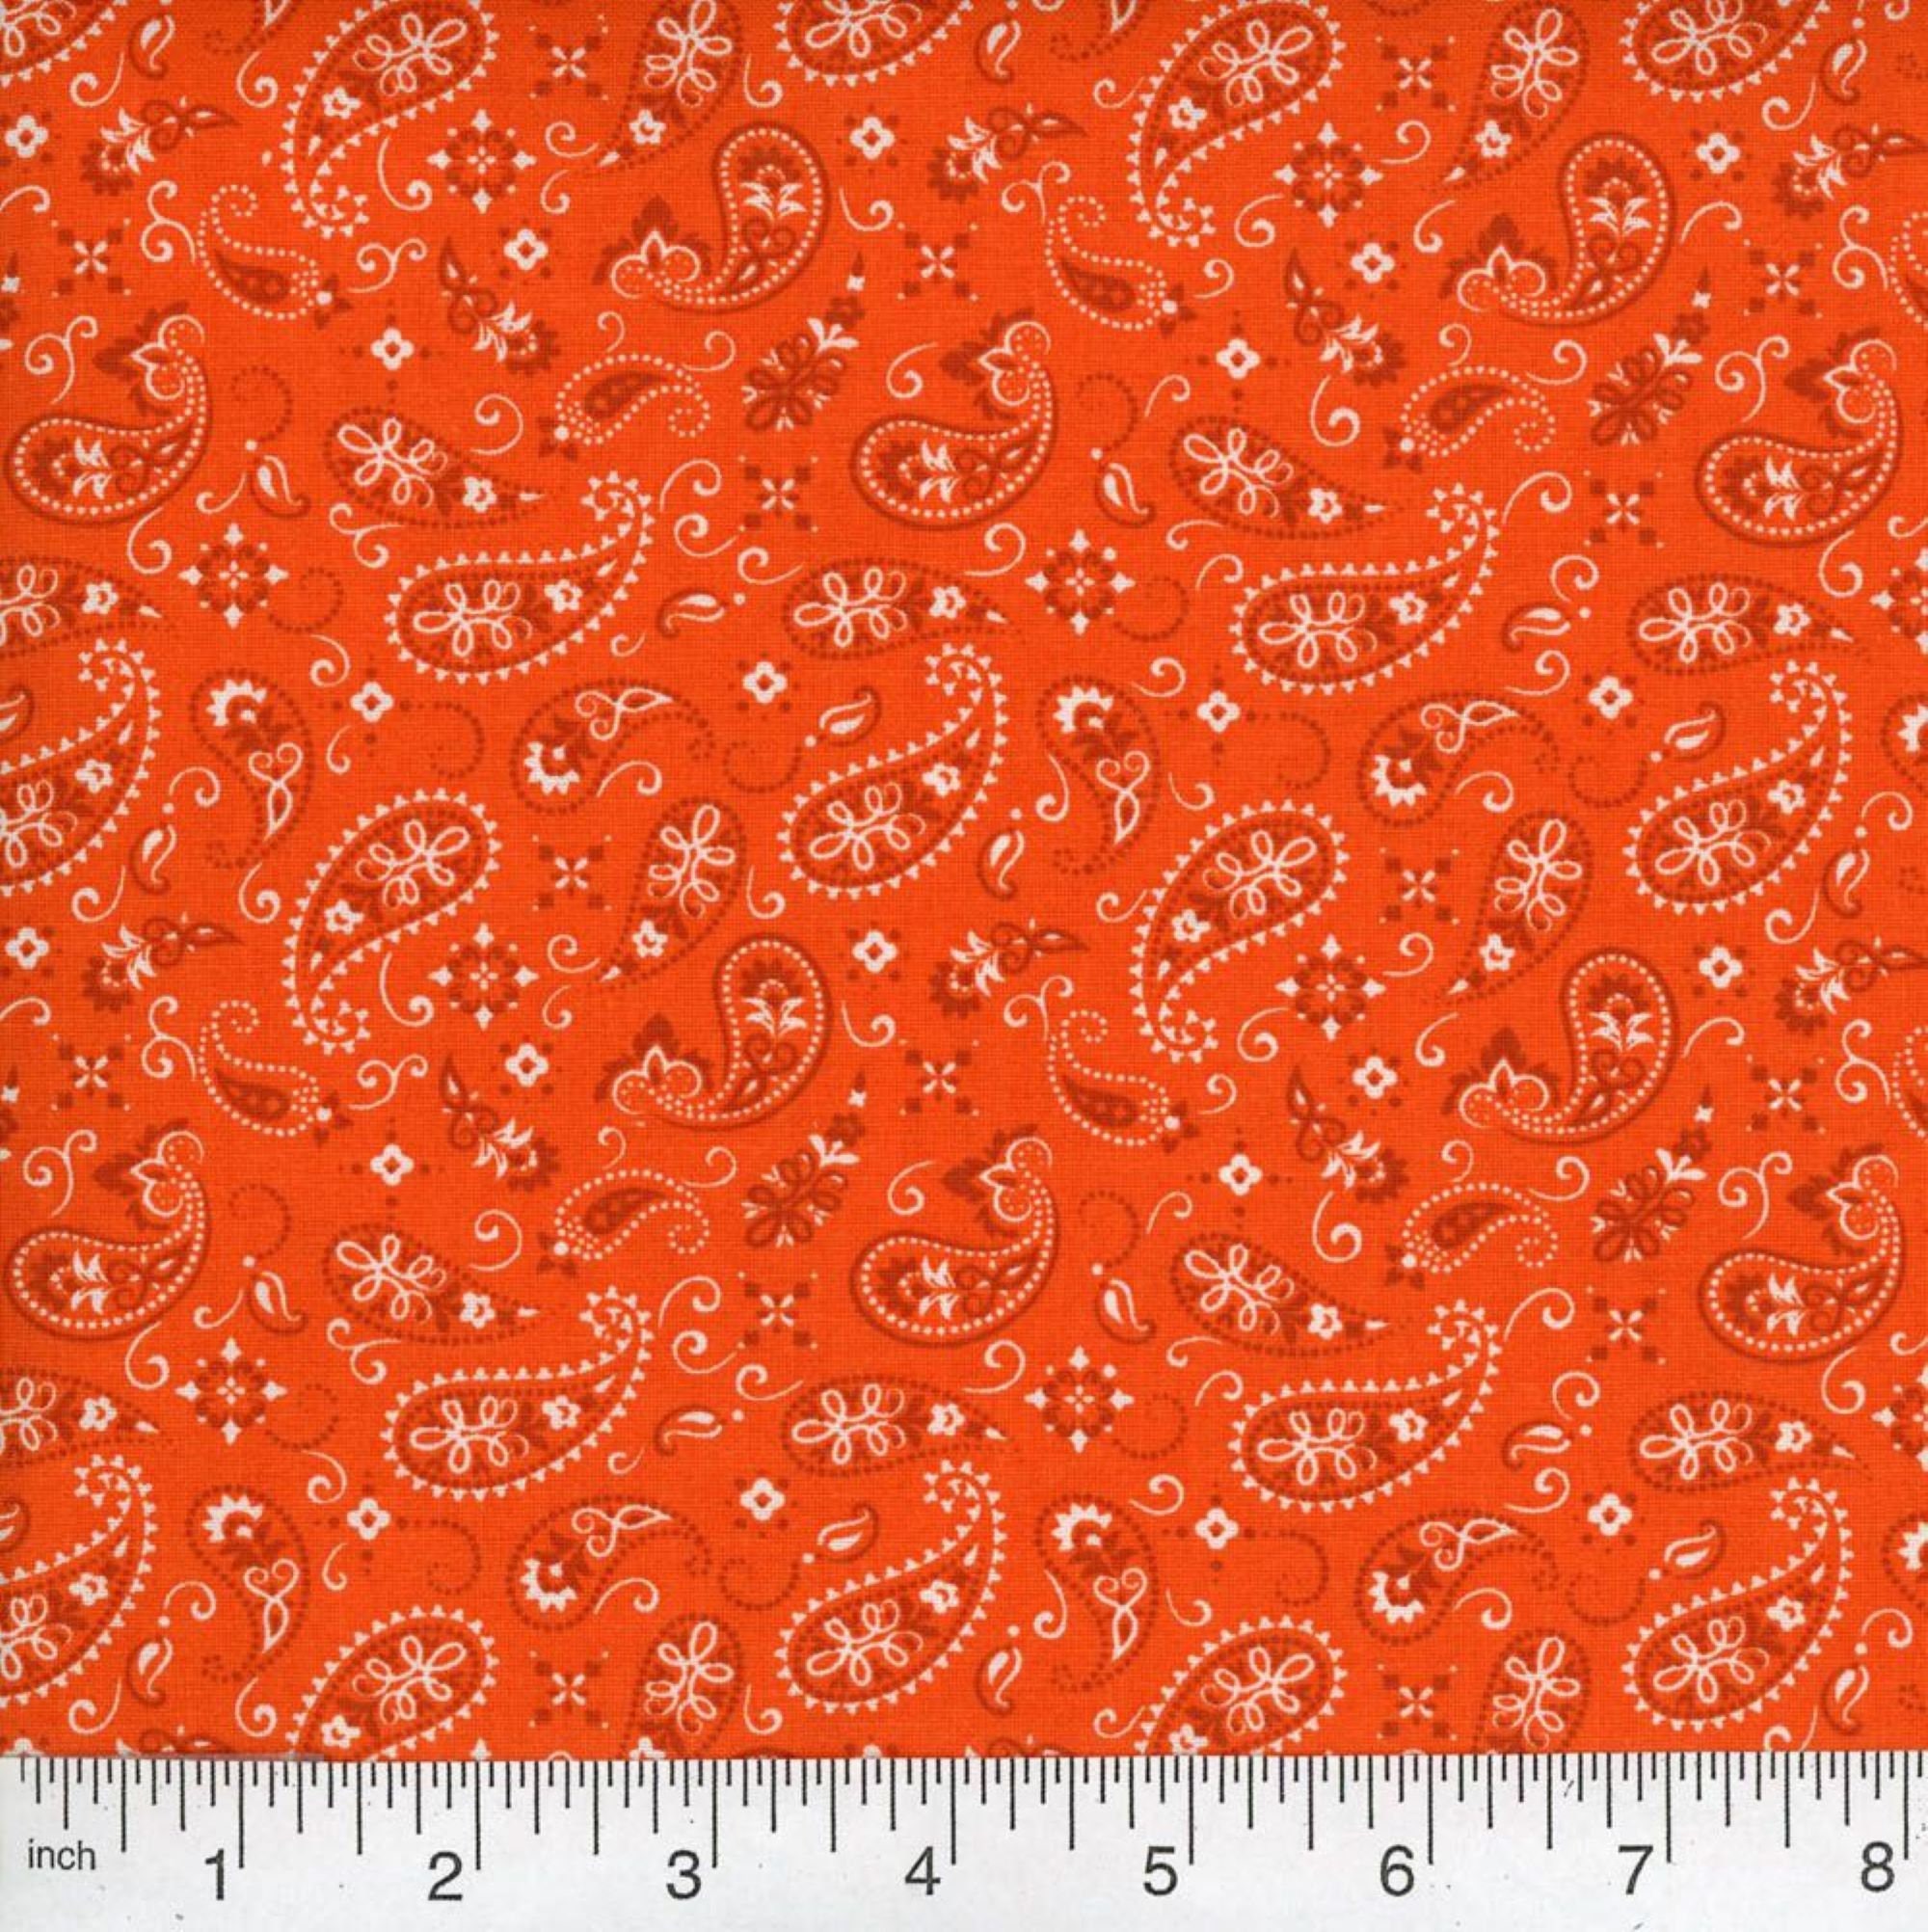 Bandana Blaze Orange Paisley, 100% Quilt Cotton, Fabric by the Yard 